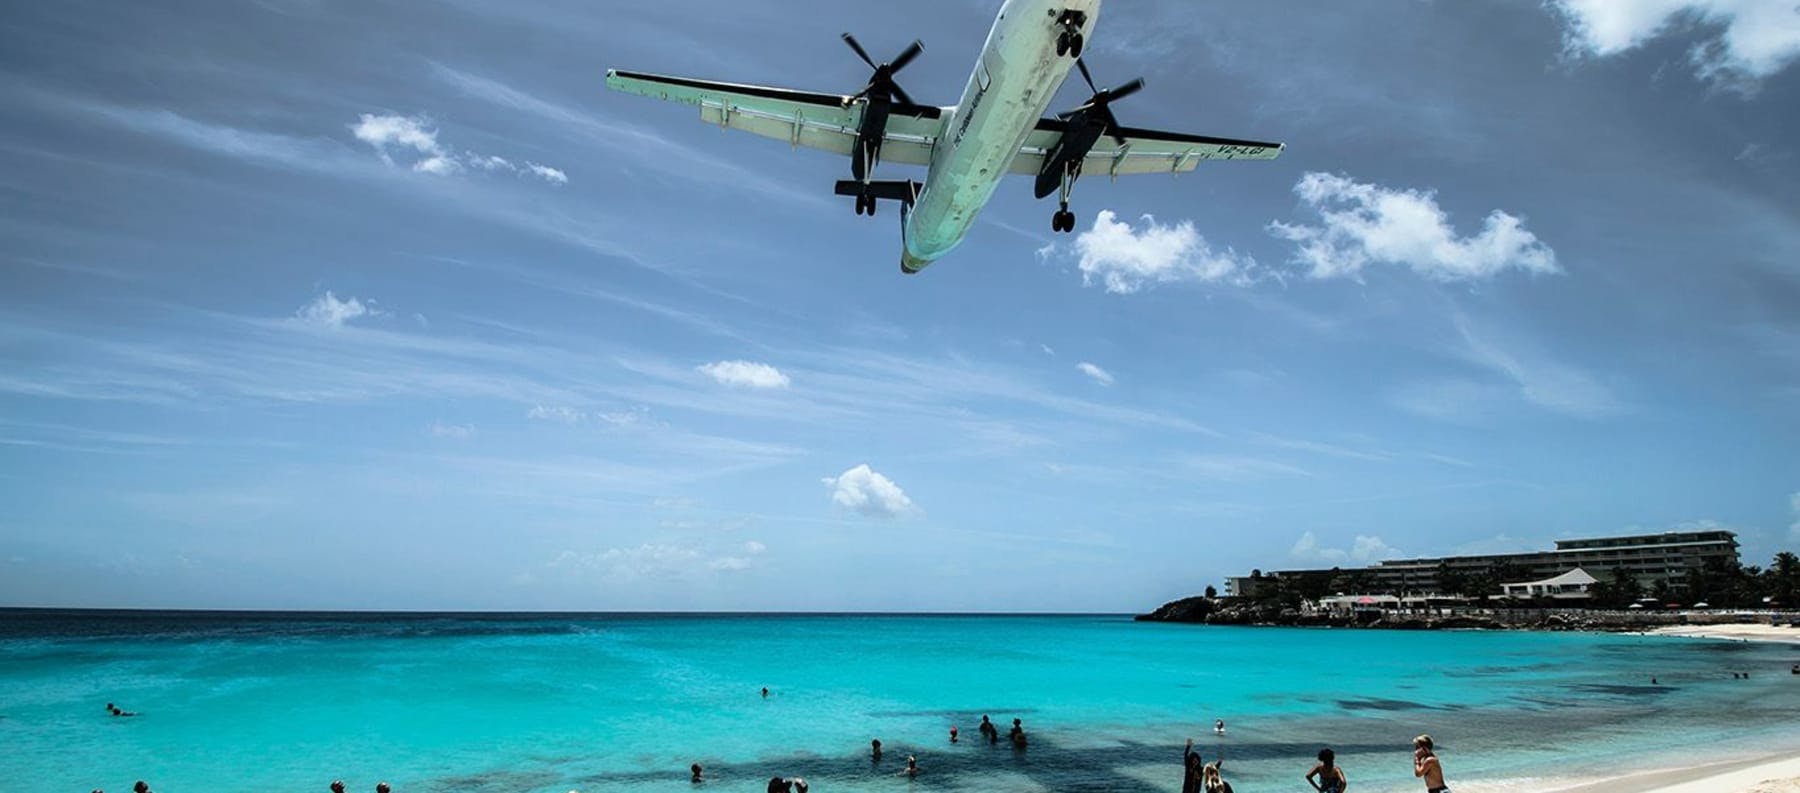 The beautiful Airport beach of St. Maarten